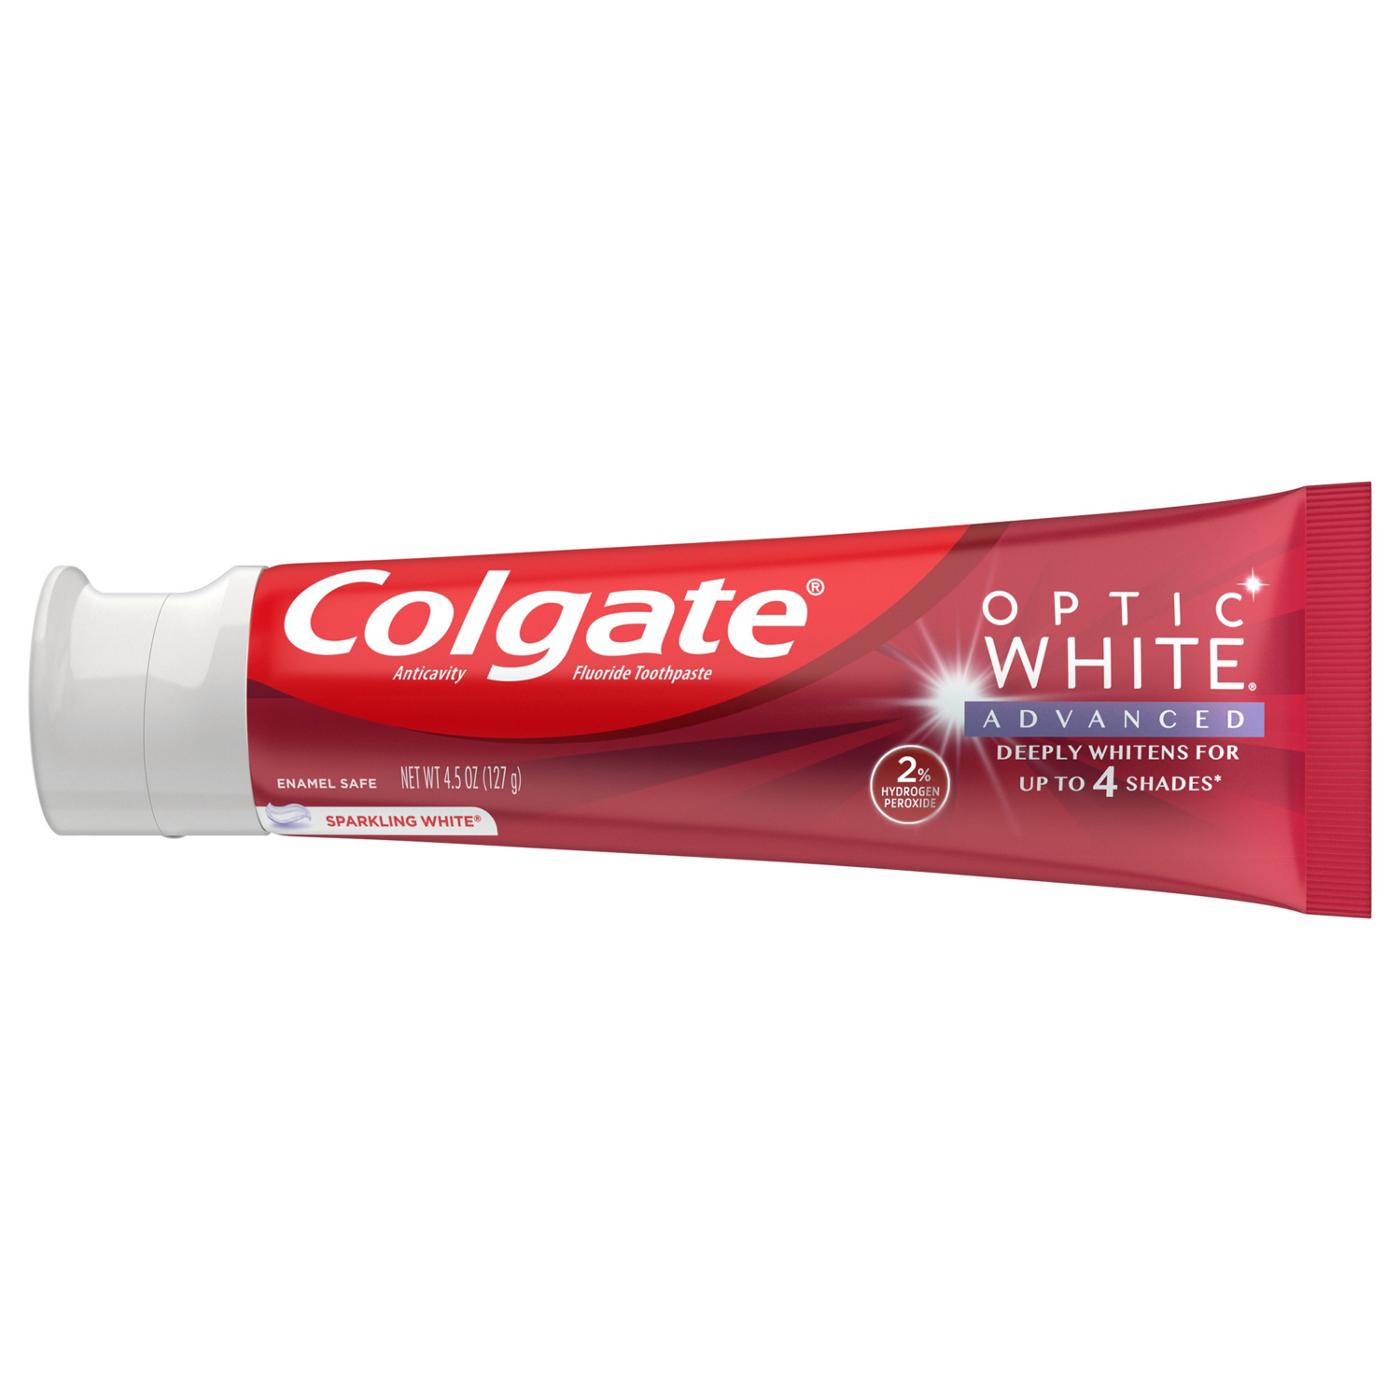 Colgate Optic White Advanced Anticavity Toothpaste - Sparkling White; image 9 of 11